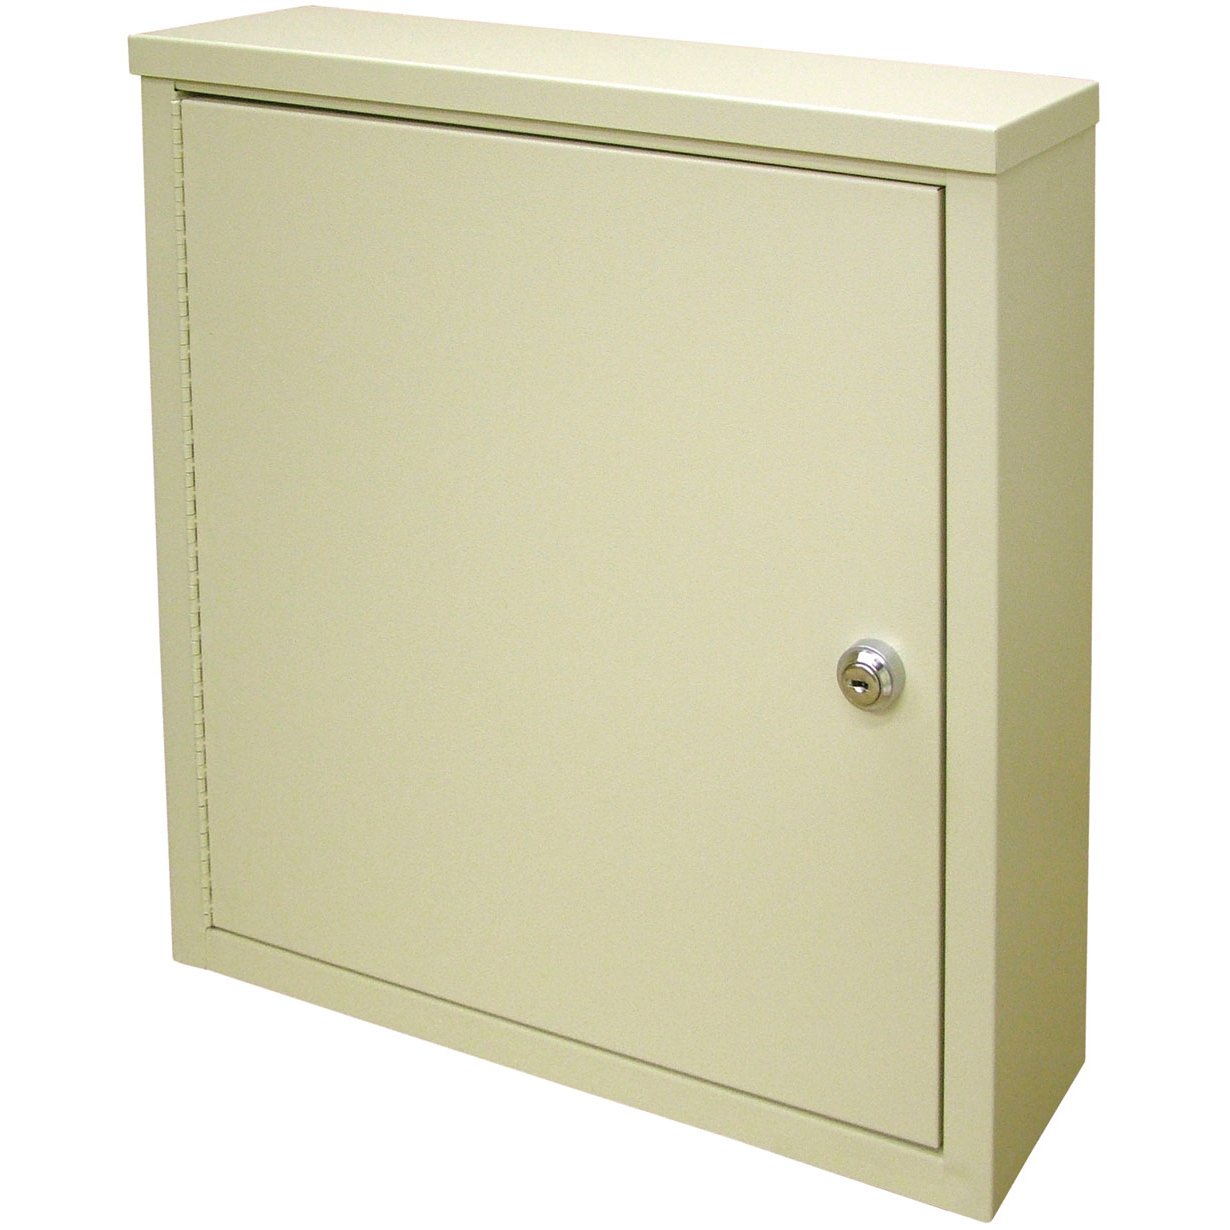 https://www.universalmedicalinc.com/media/catalog/product/cache/14c6913e87743aac292365f96b0264a8/2/9/291610-bg_small-wall-storage-cabinet-beige_1.jpg